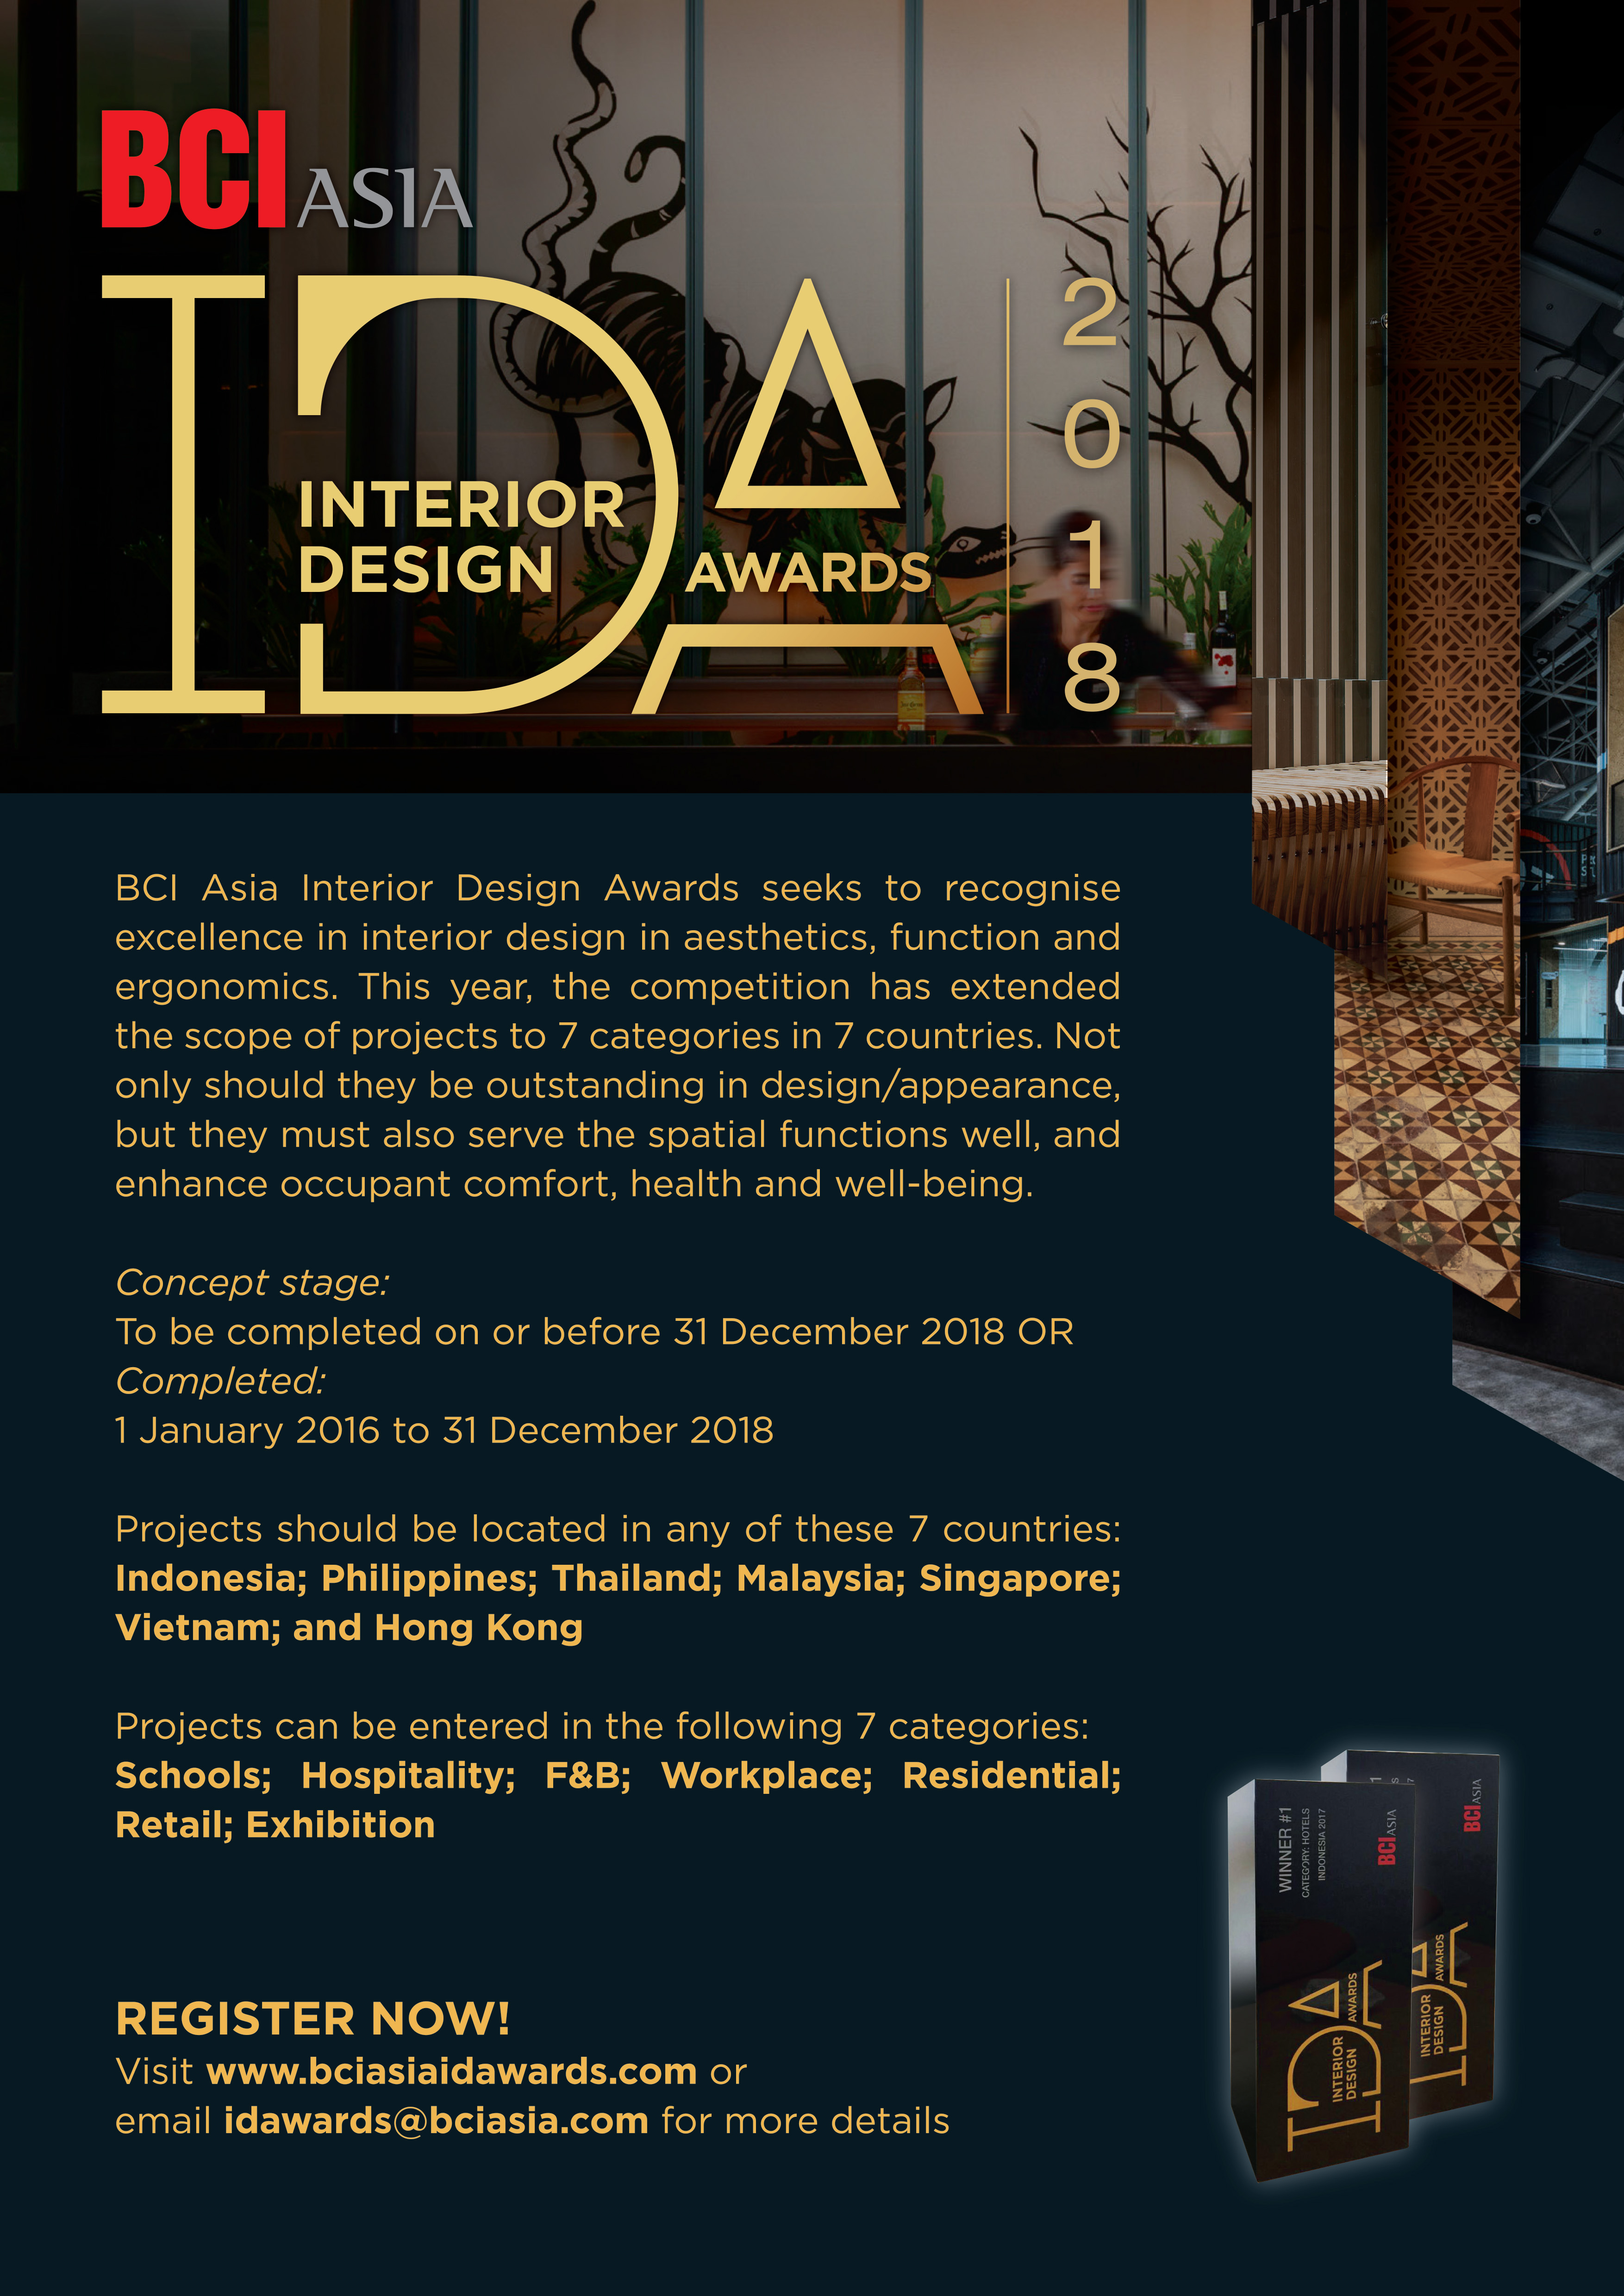 BCI Asia Interior Design Awards